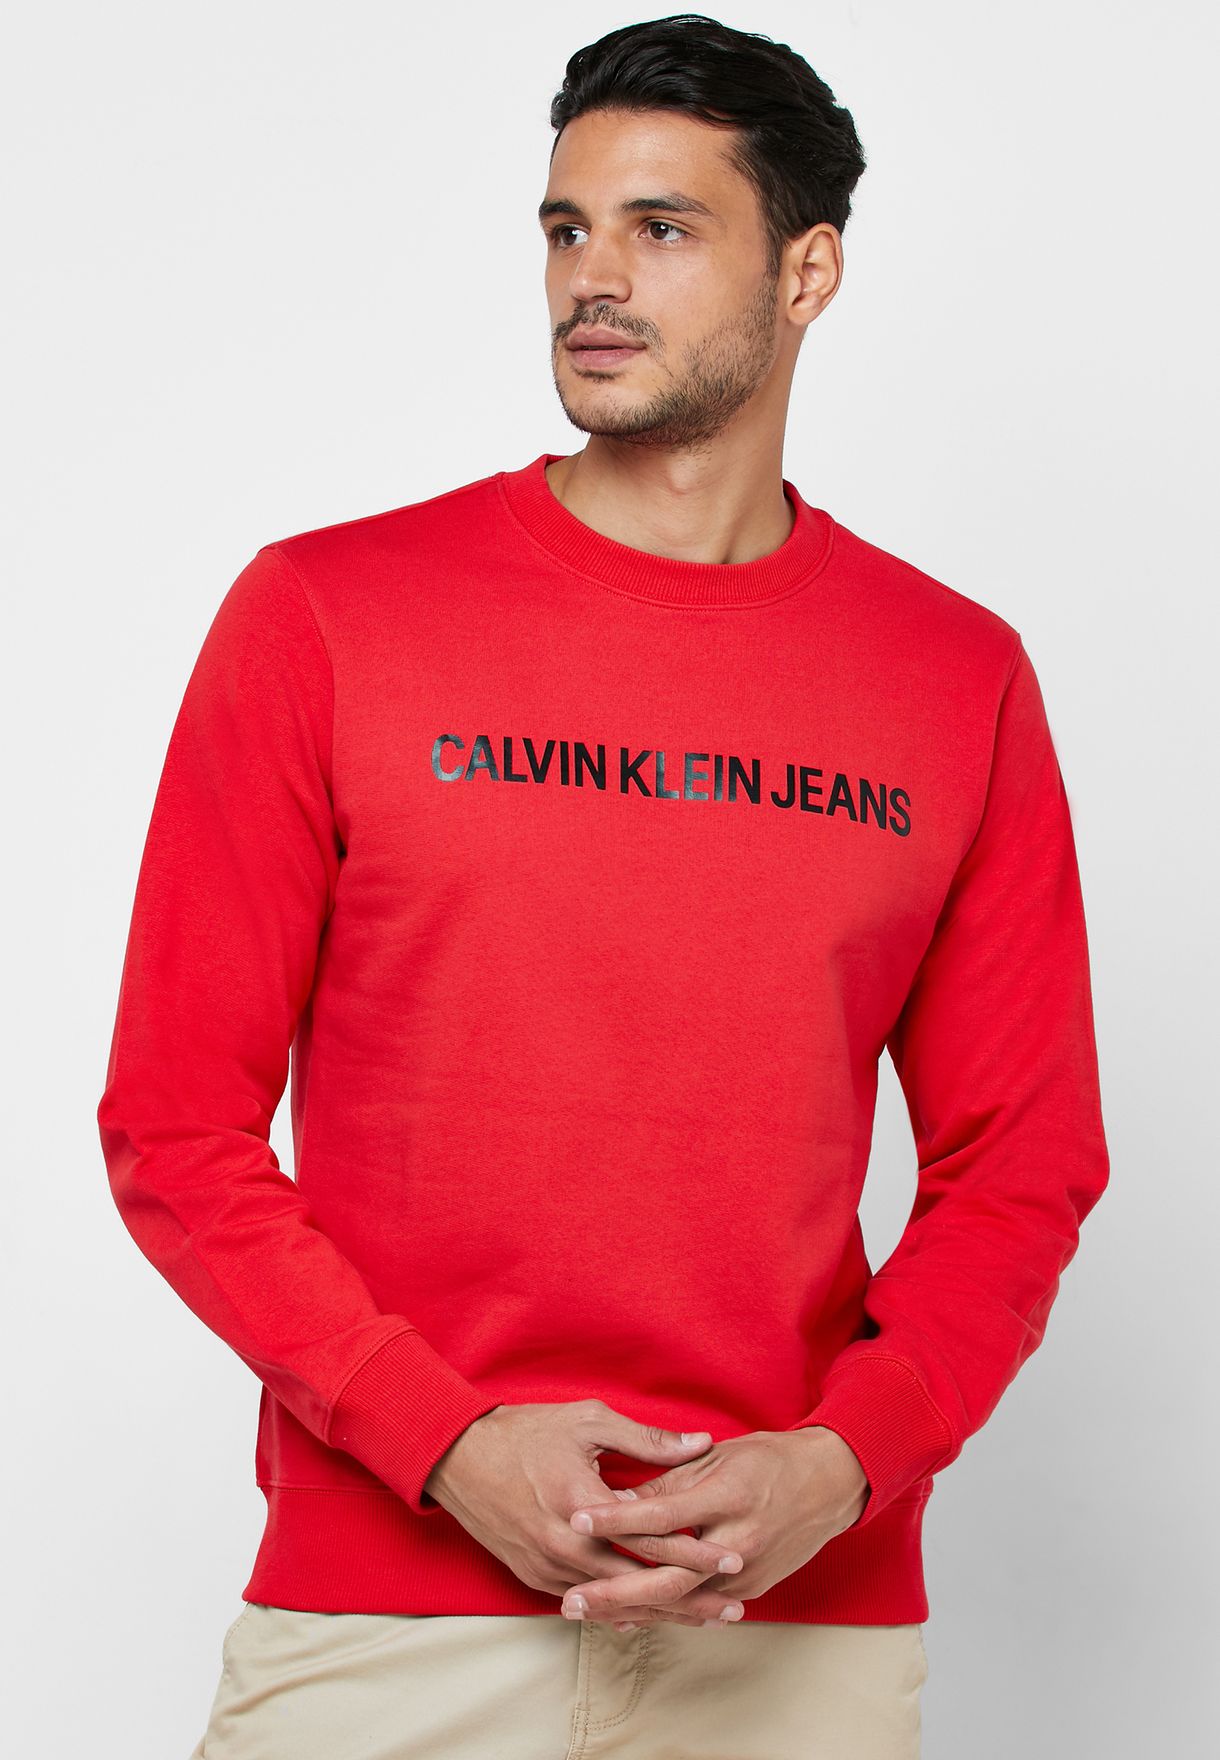 Introducir 70+ imagen calvin klein jeans red sweater